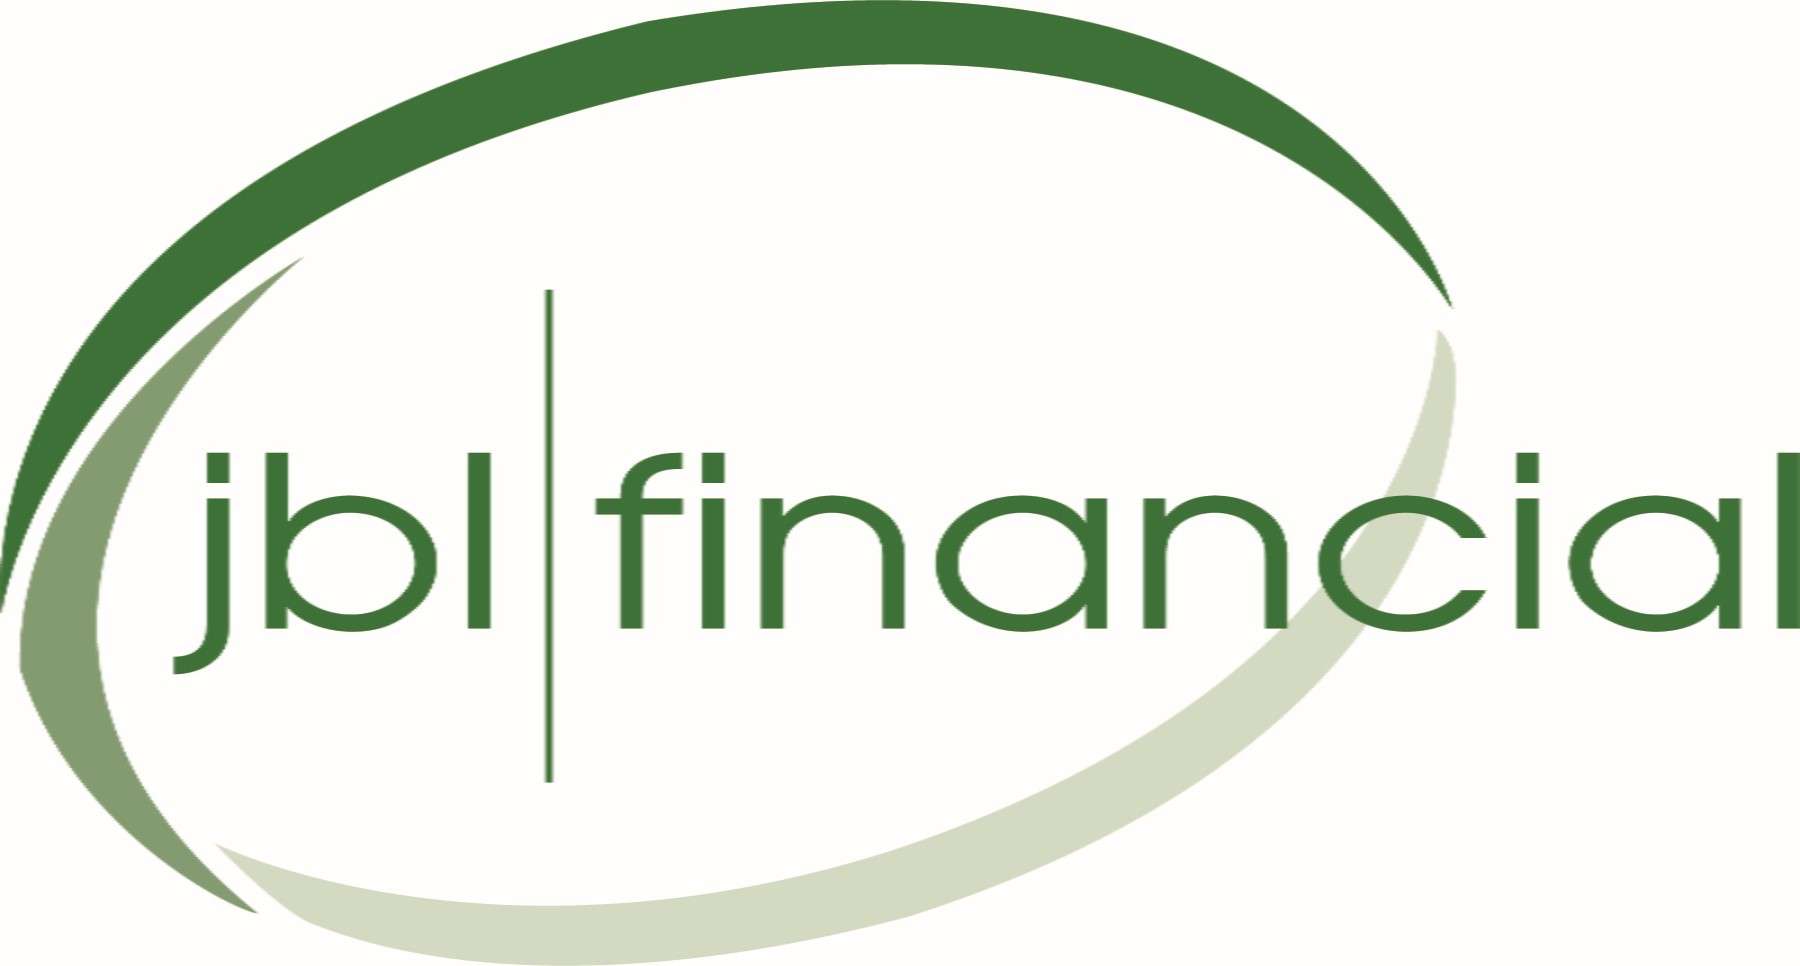 JBL Financial Services Logo